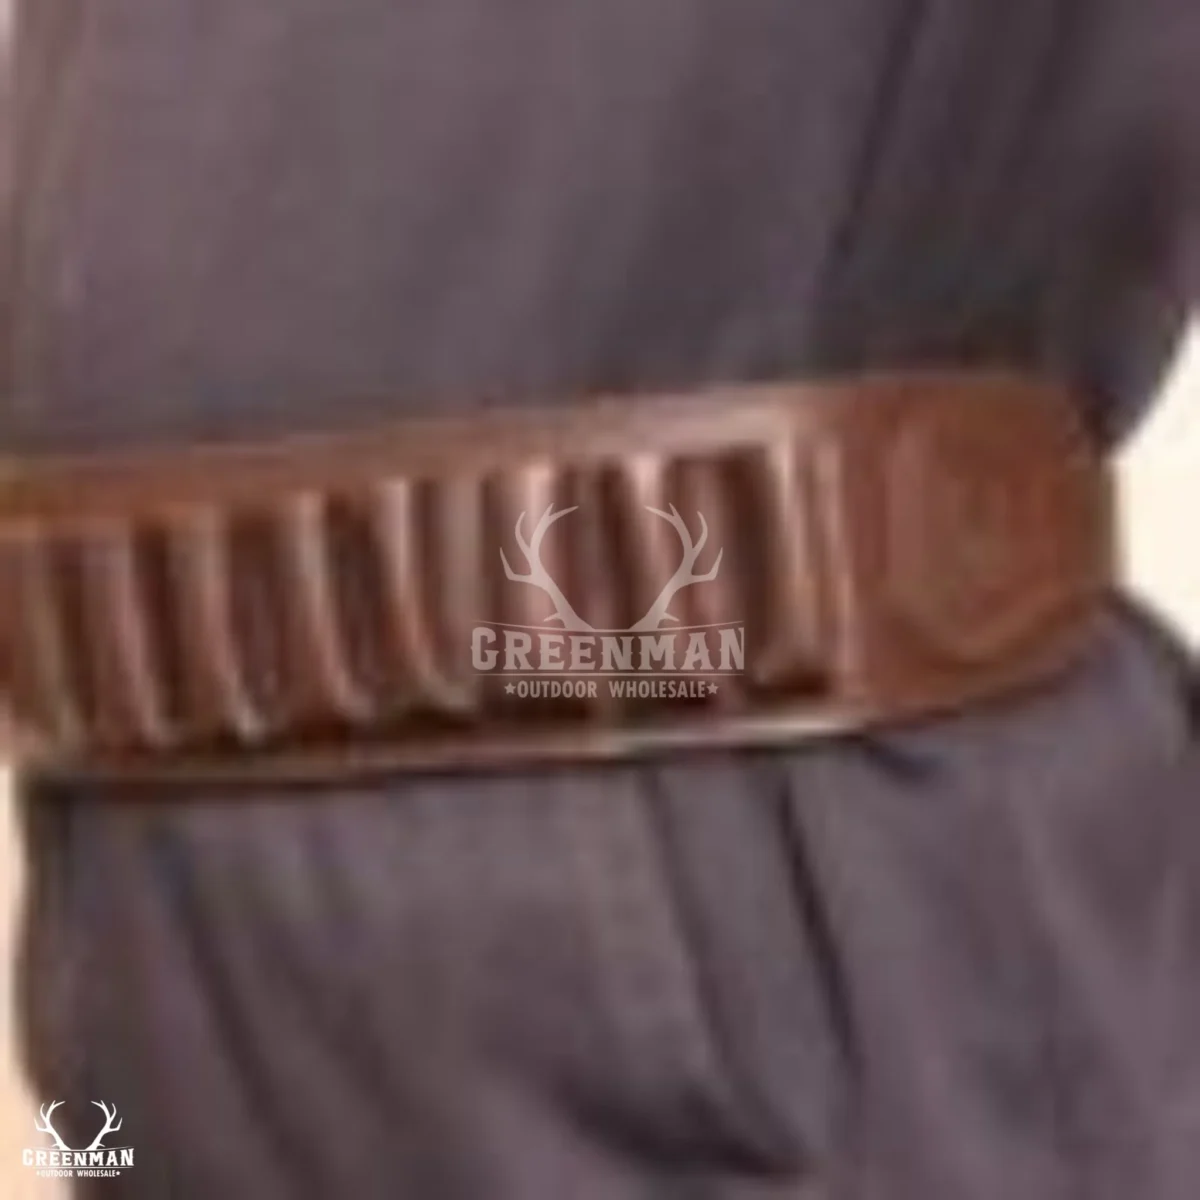 leather cartridge belt, brown cartridge belt